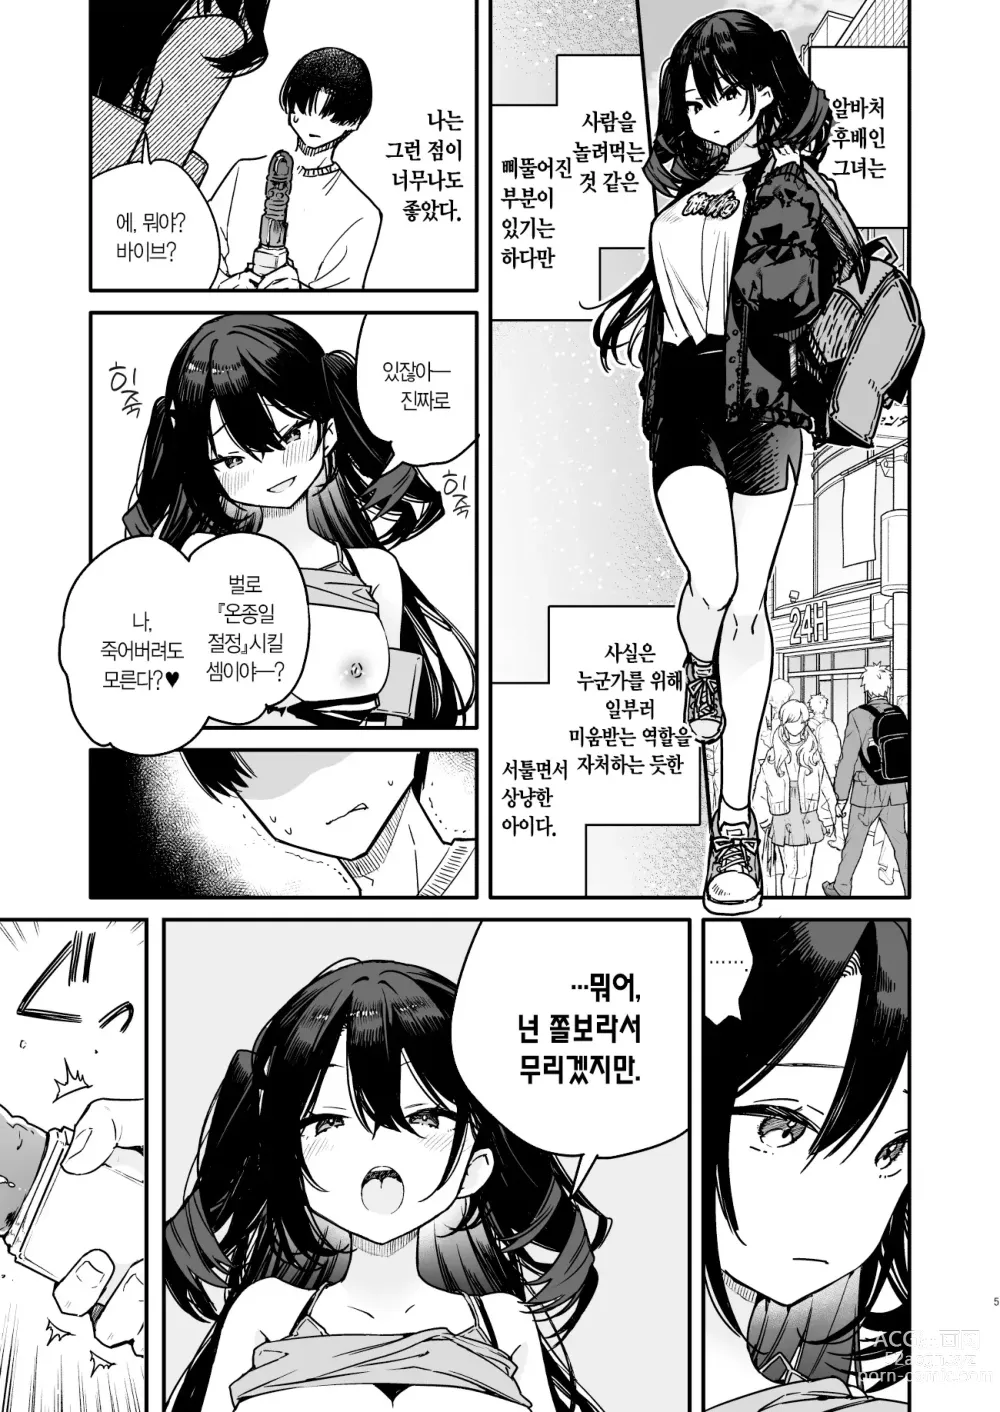 Page 5 of doujinshi 건방떠는 그녀에게 긁히면서 온종일 강제쾌락절정 참교육 섹스